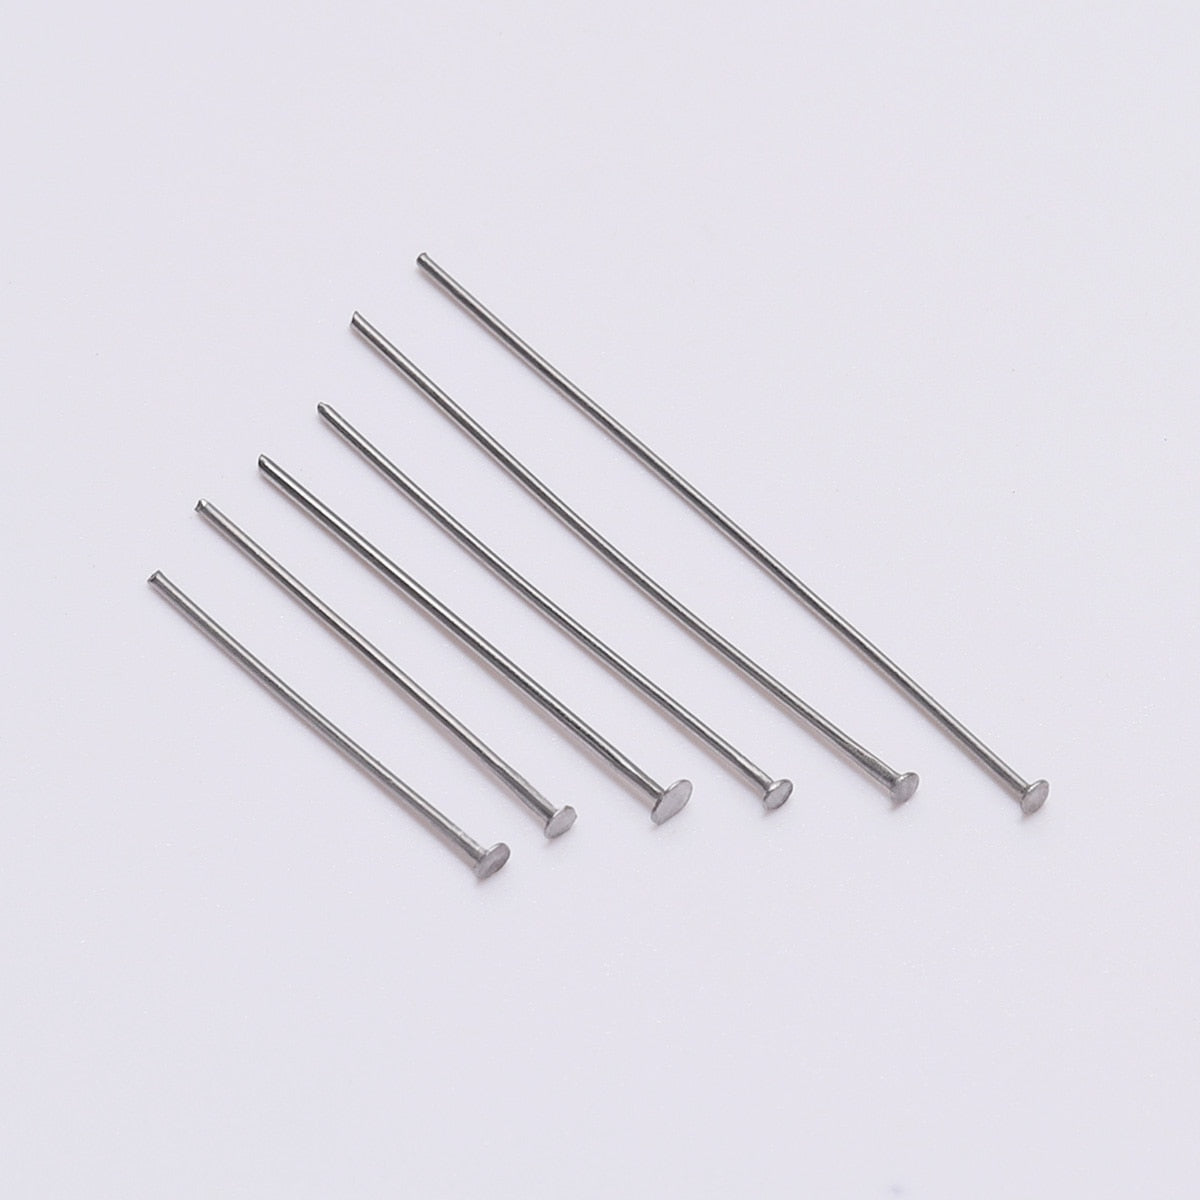 15-70mm Stainless Steel Flat Head Pins, 100pcs